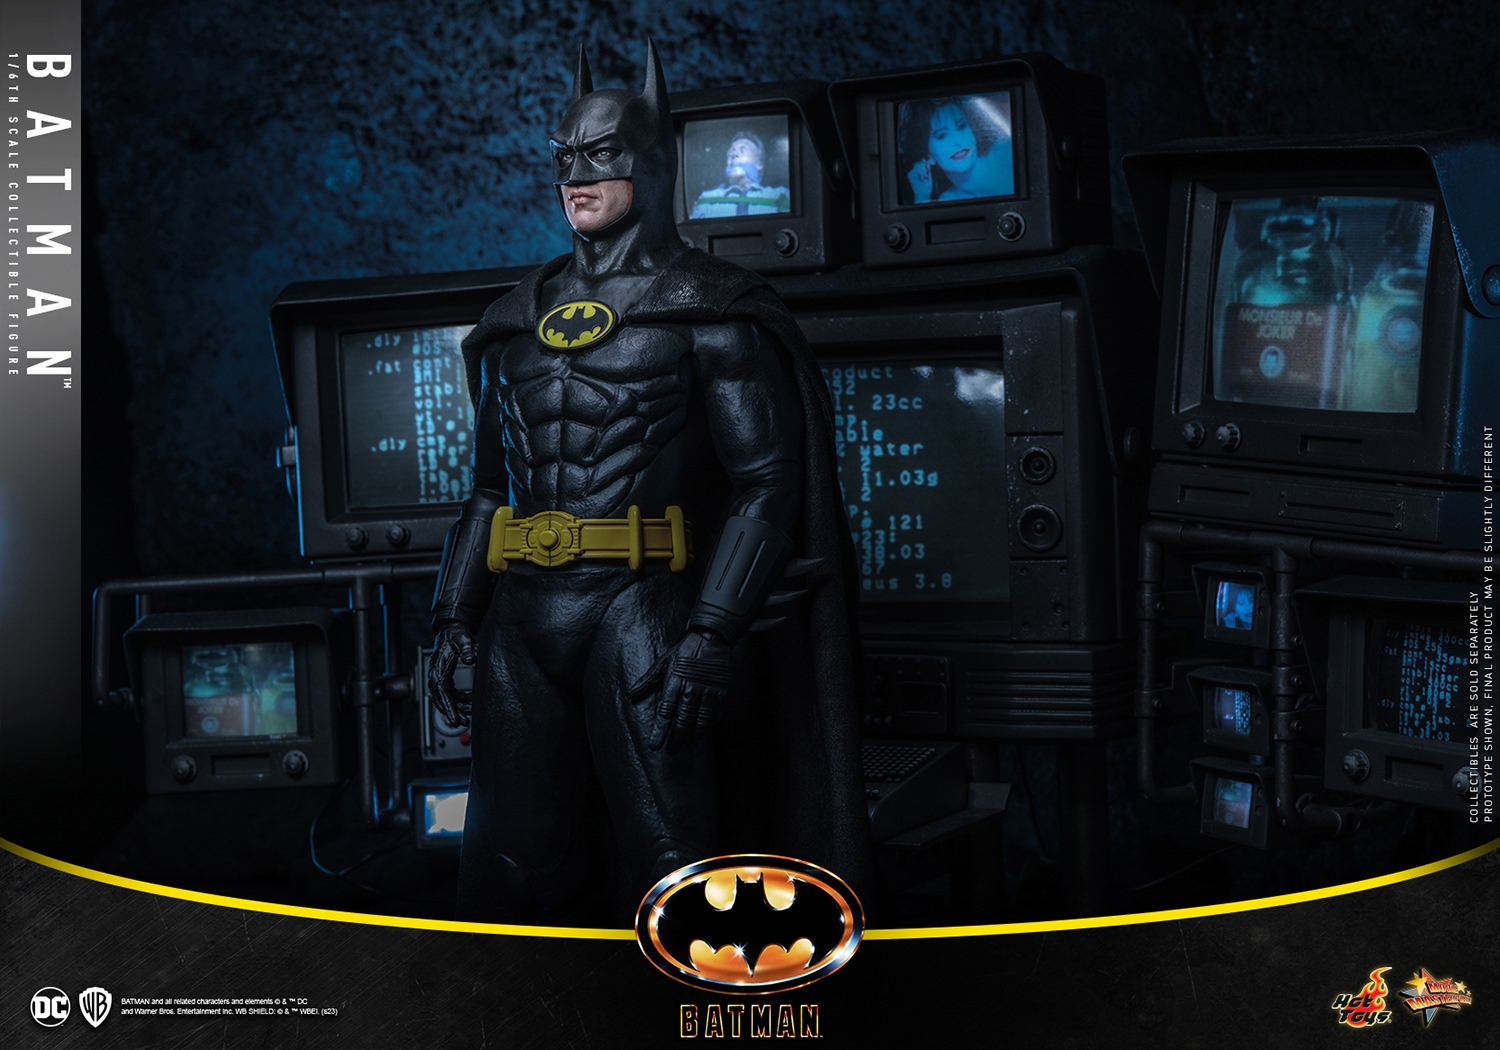 batman_dc-comics_gallery_63ebc8ce9cc11.jpg